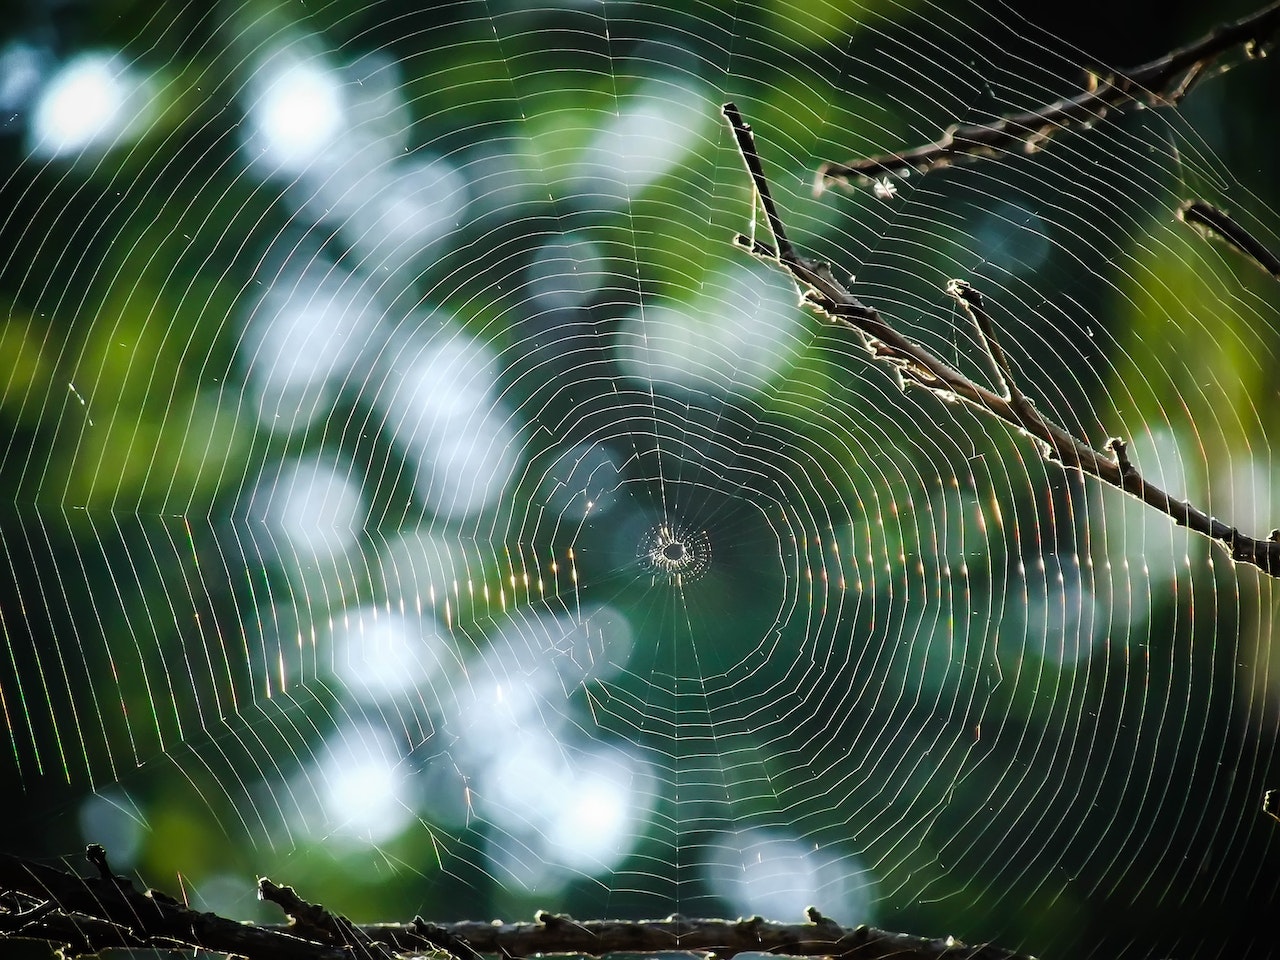 A Spider Web